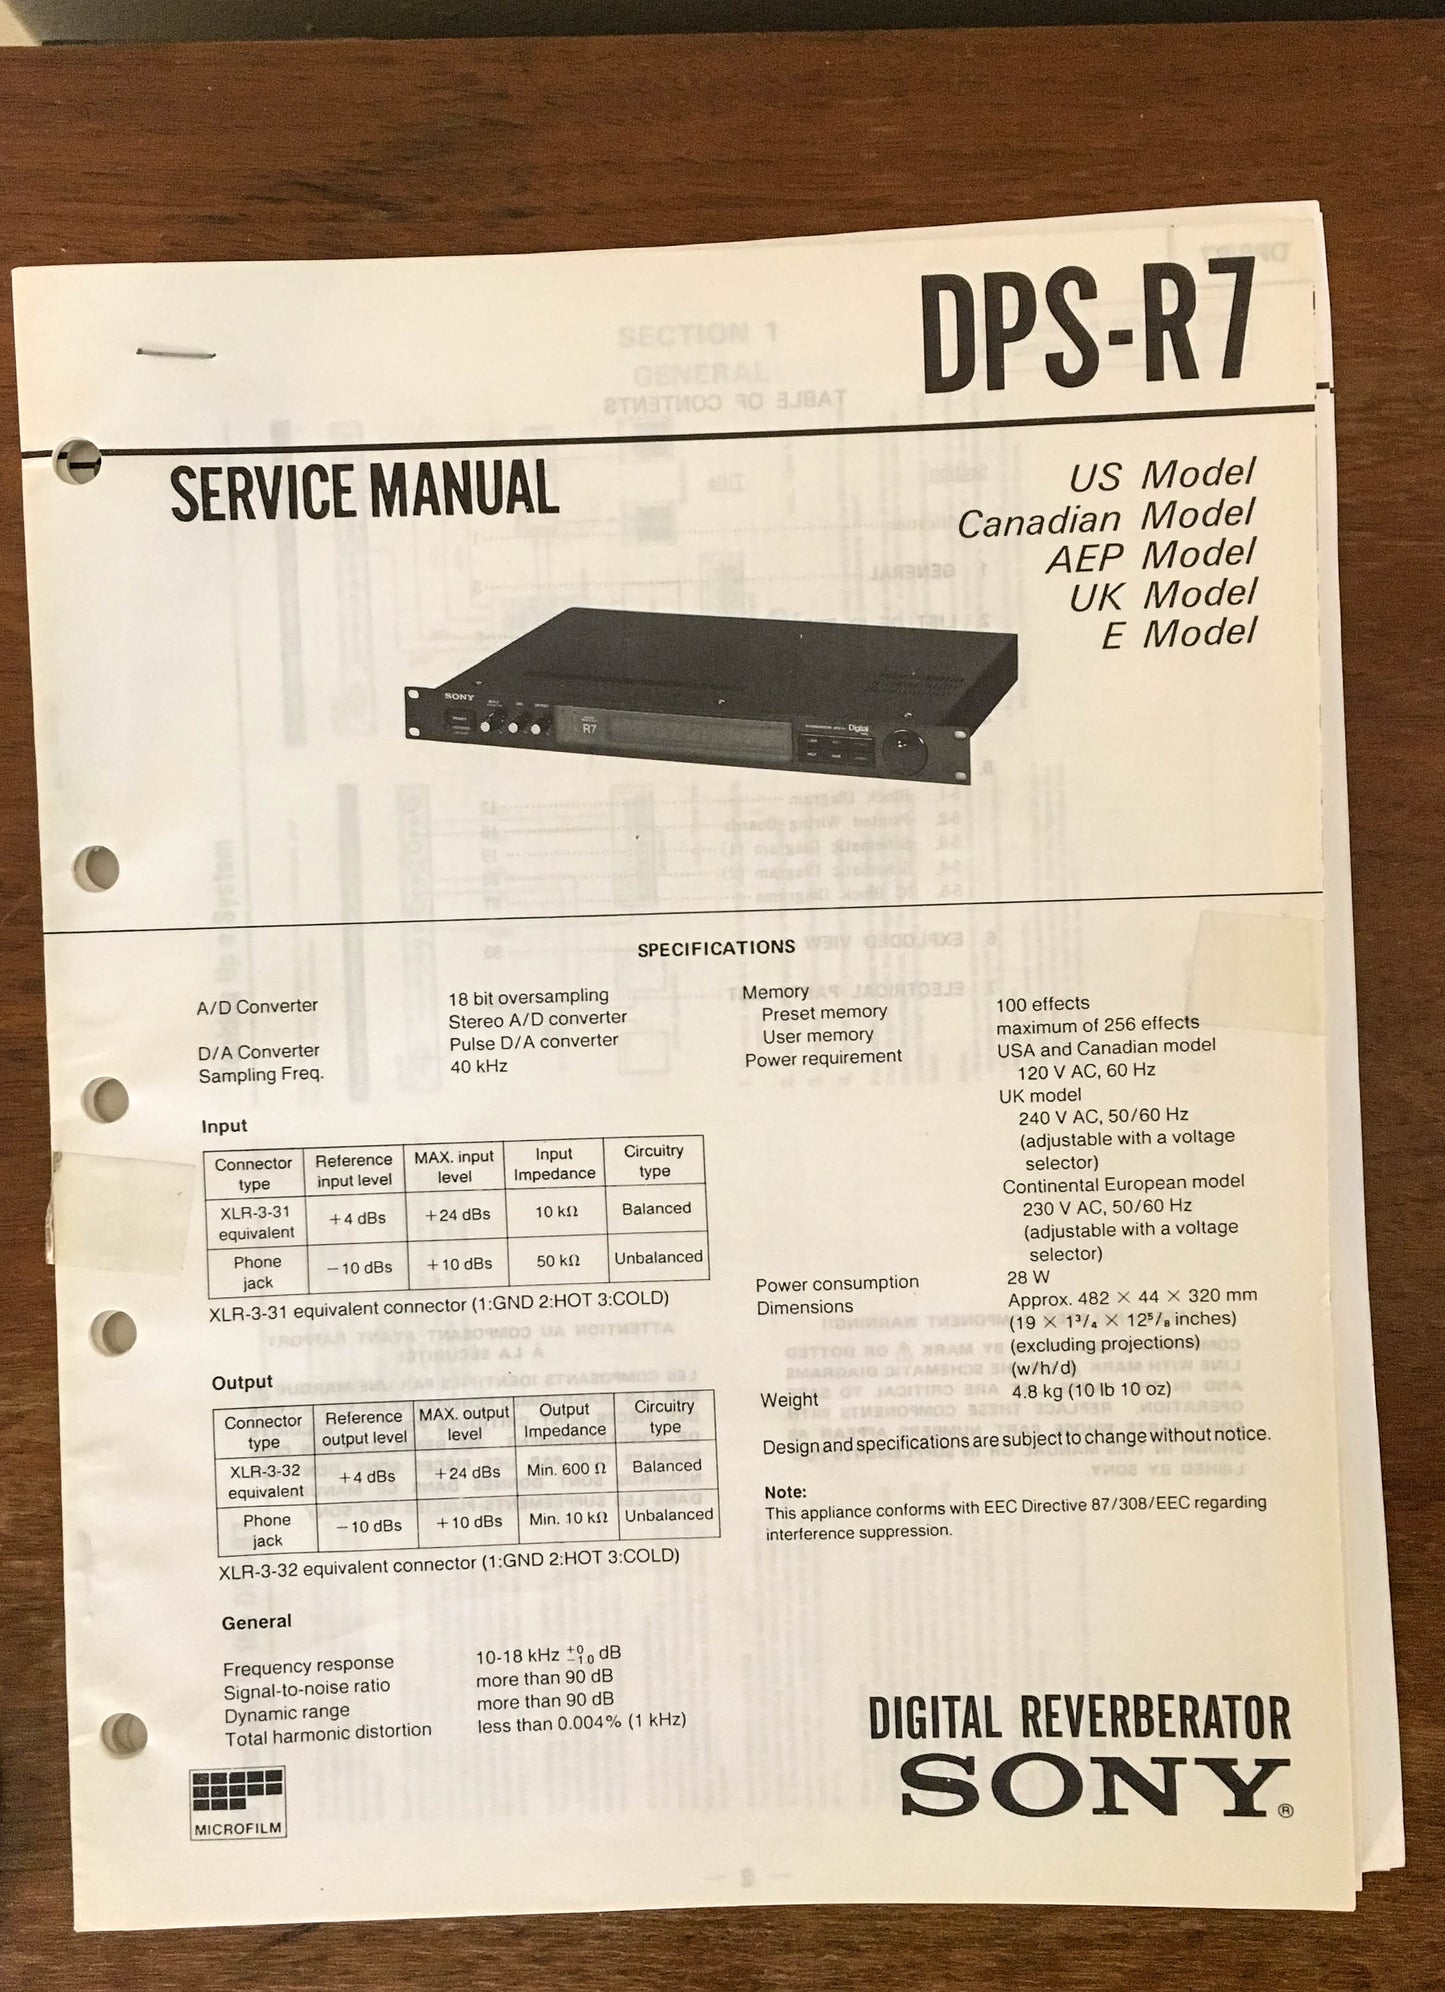 Sony DPS-R7 Digital Reverberator  Service Manual *Original*